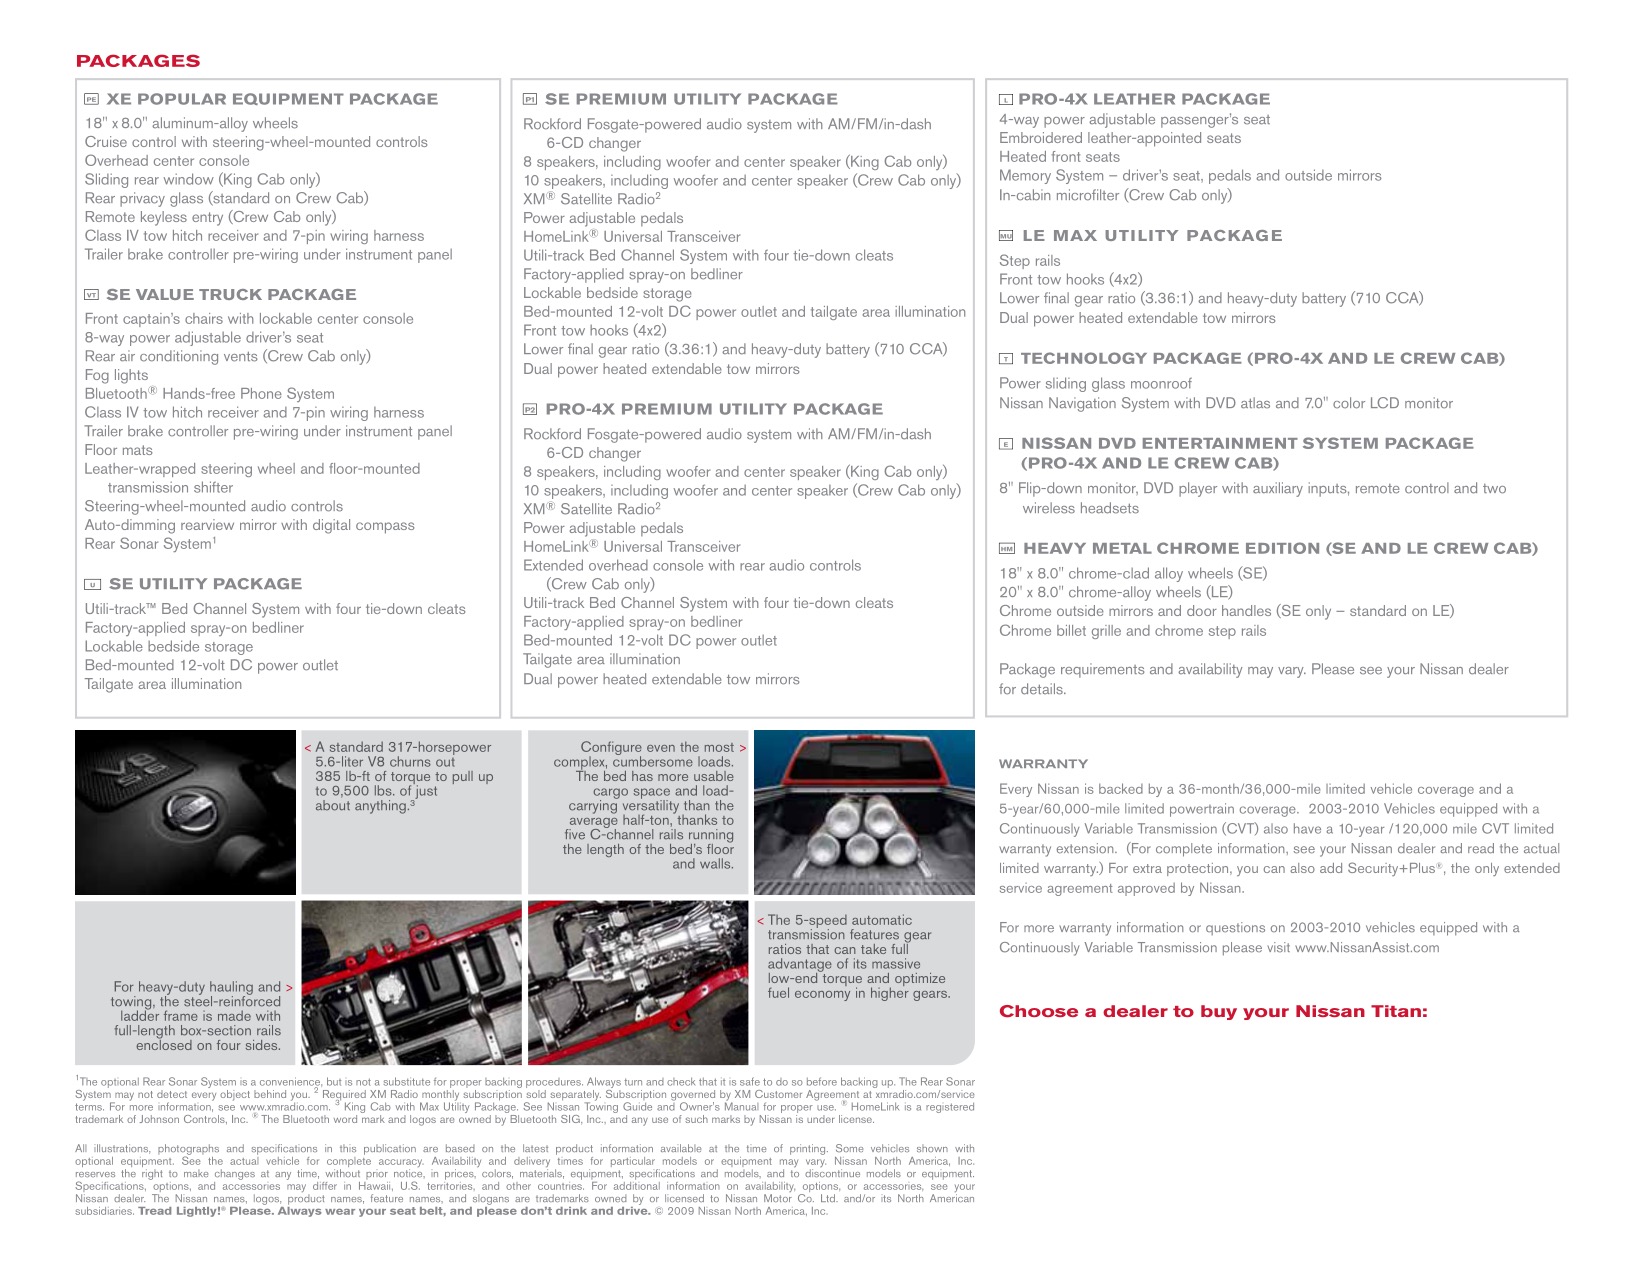 2010 Nissan Titan Brochure Page 4